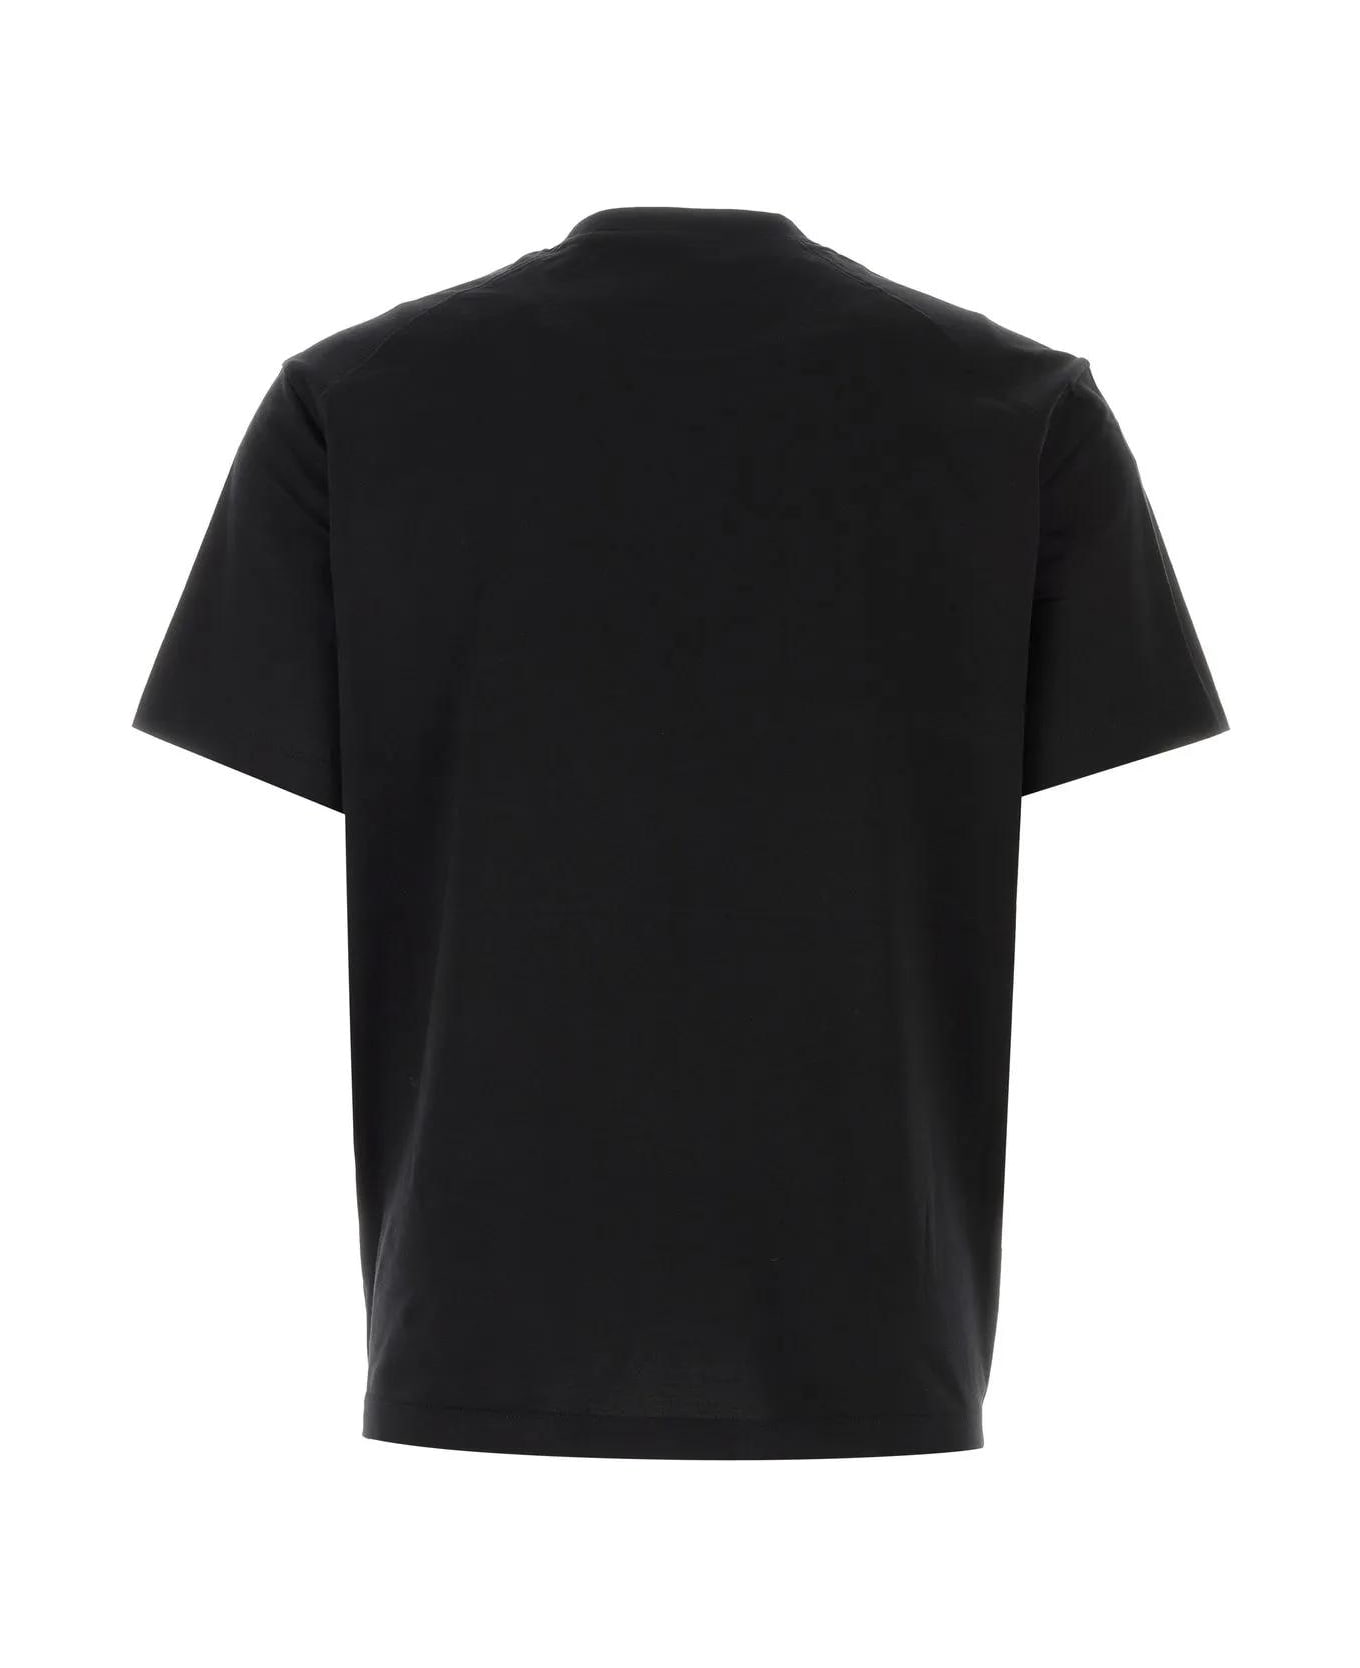 Y-3 Black Cotton T-shirt